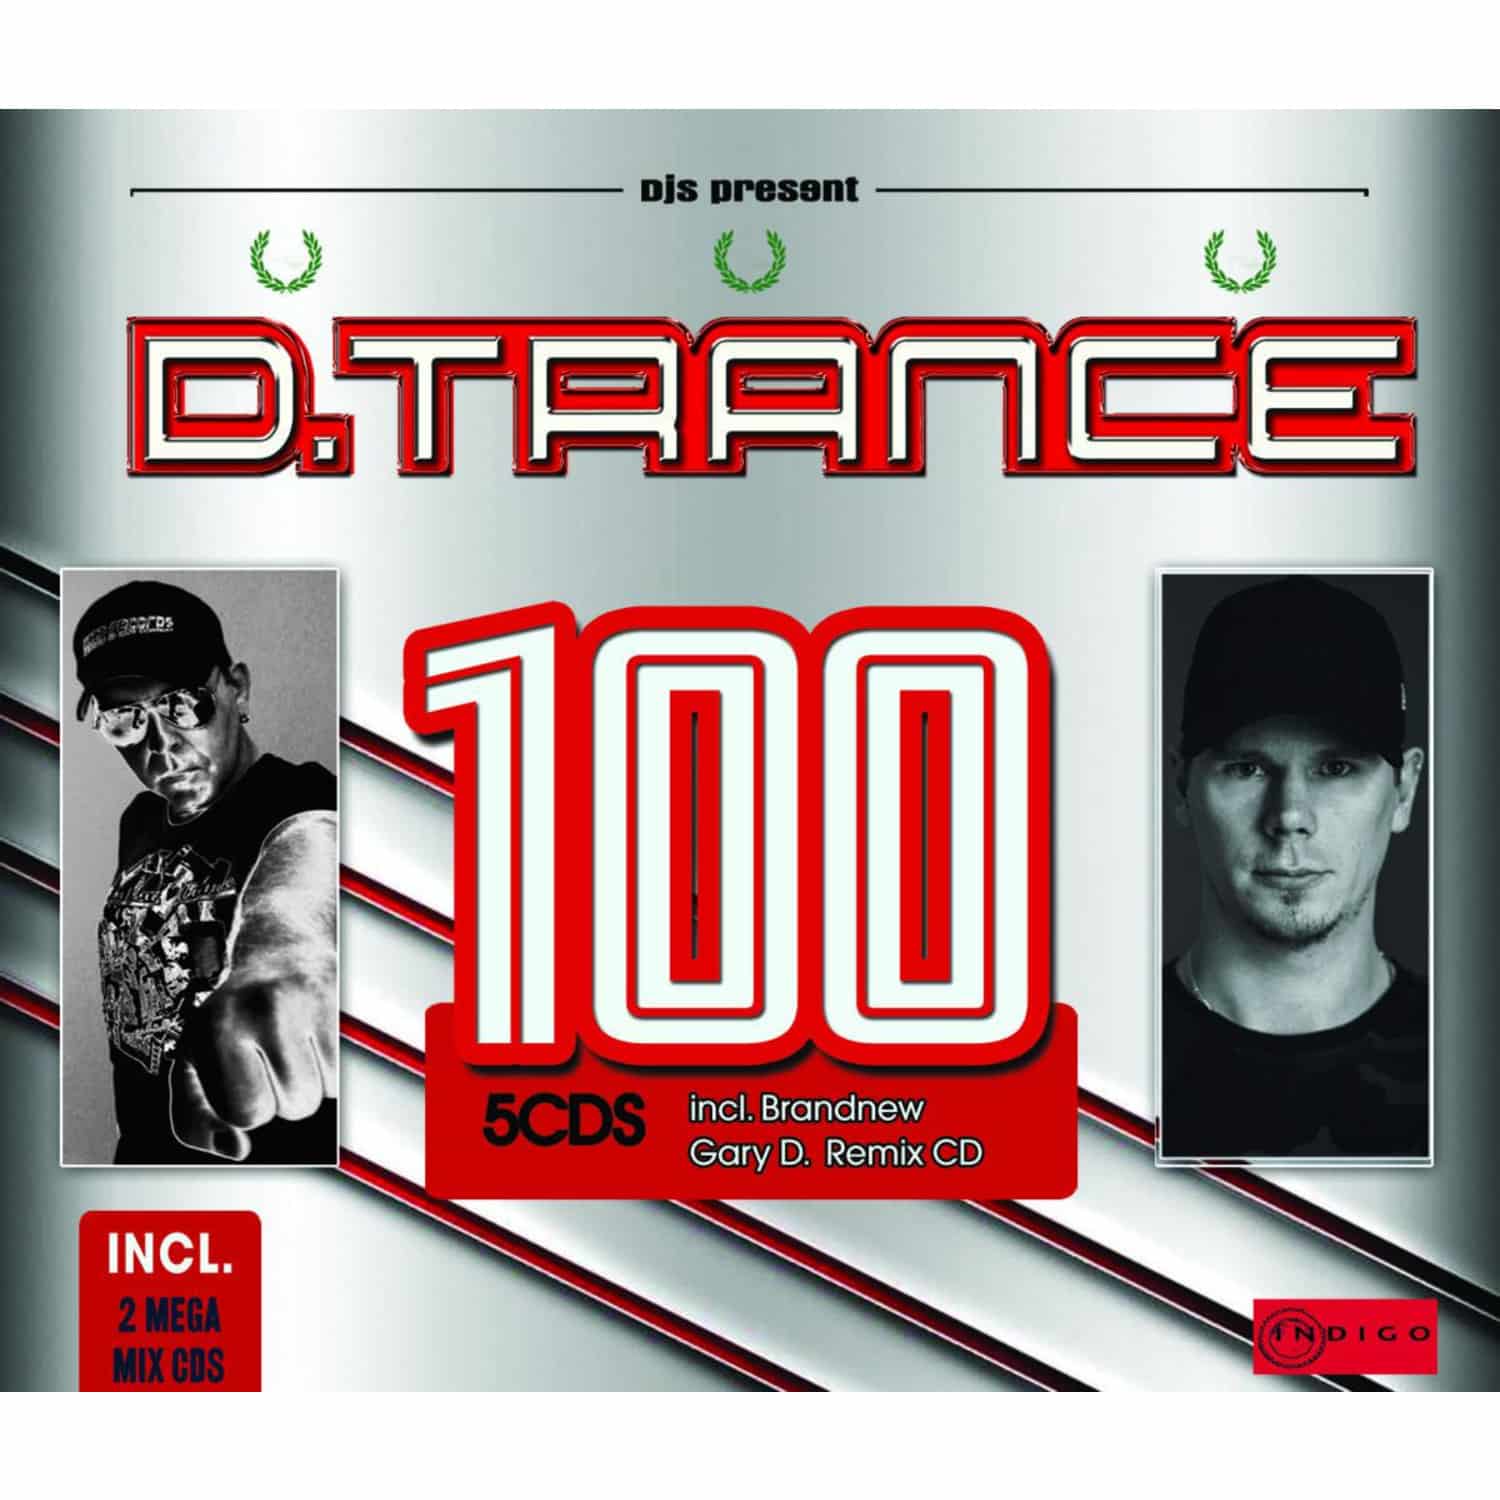 Various Artists - D.TRANCE 100